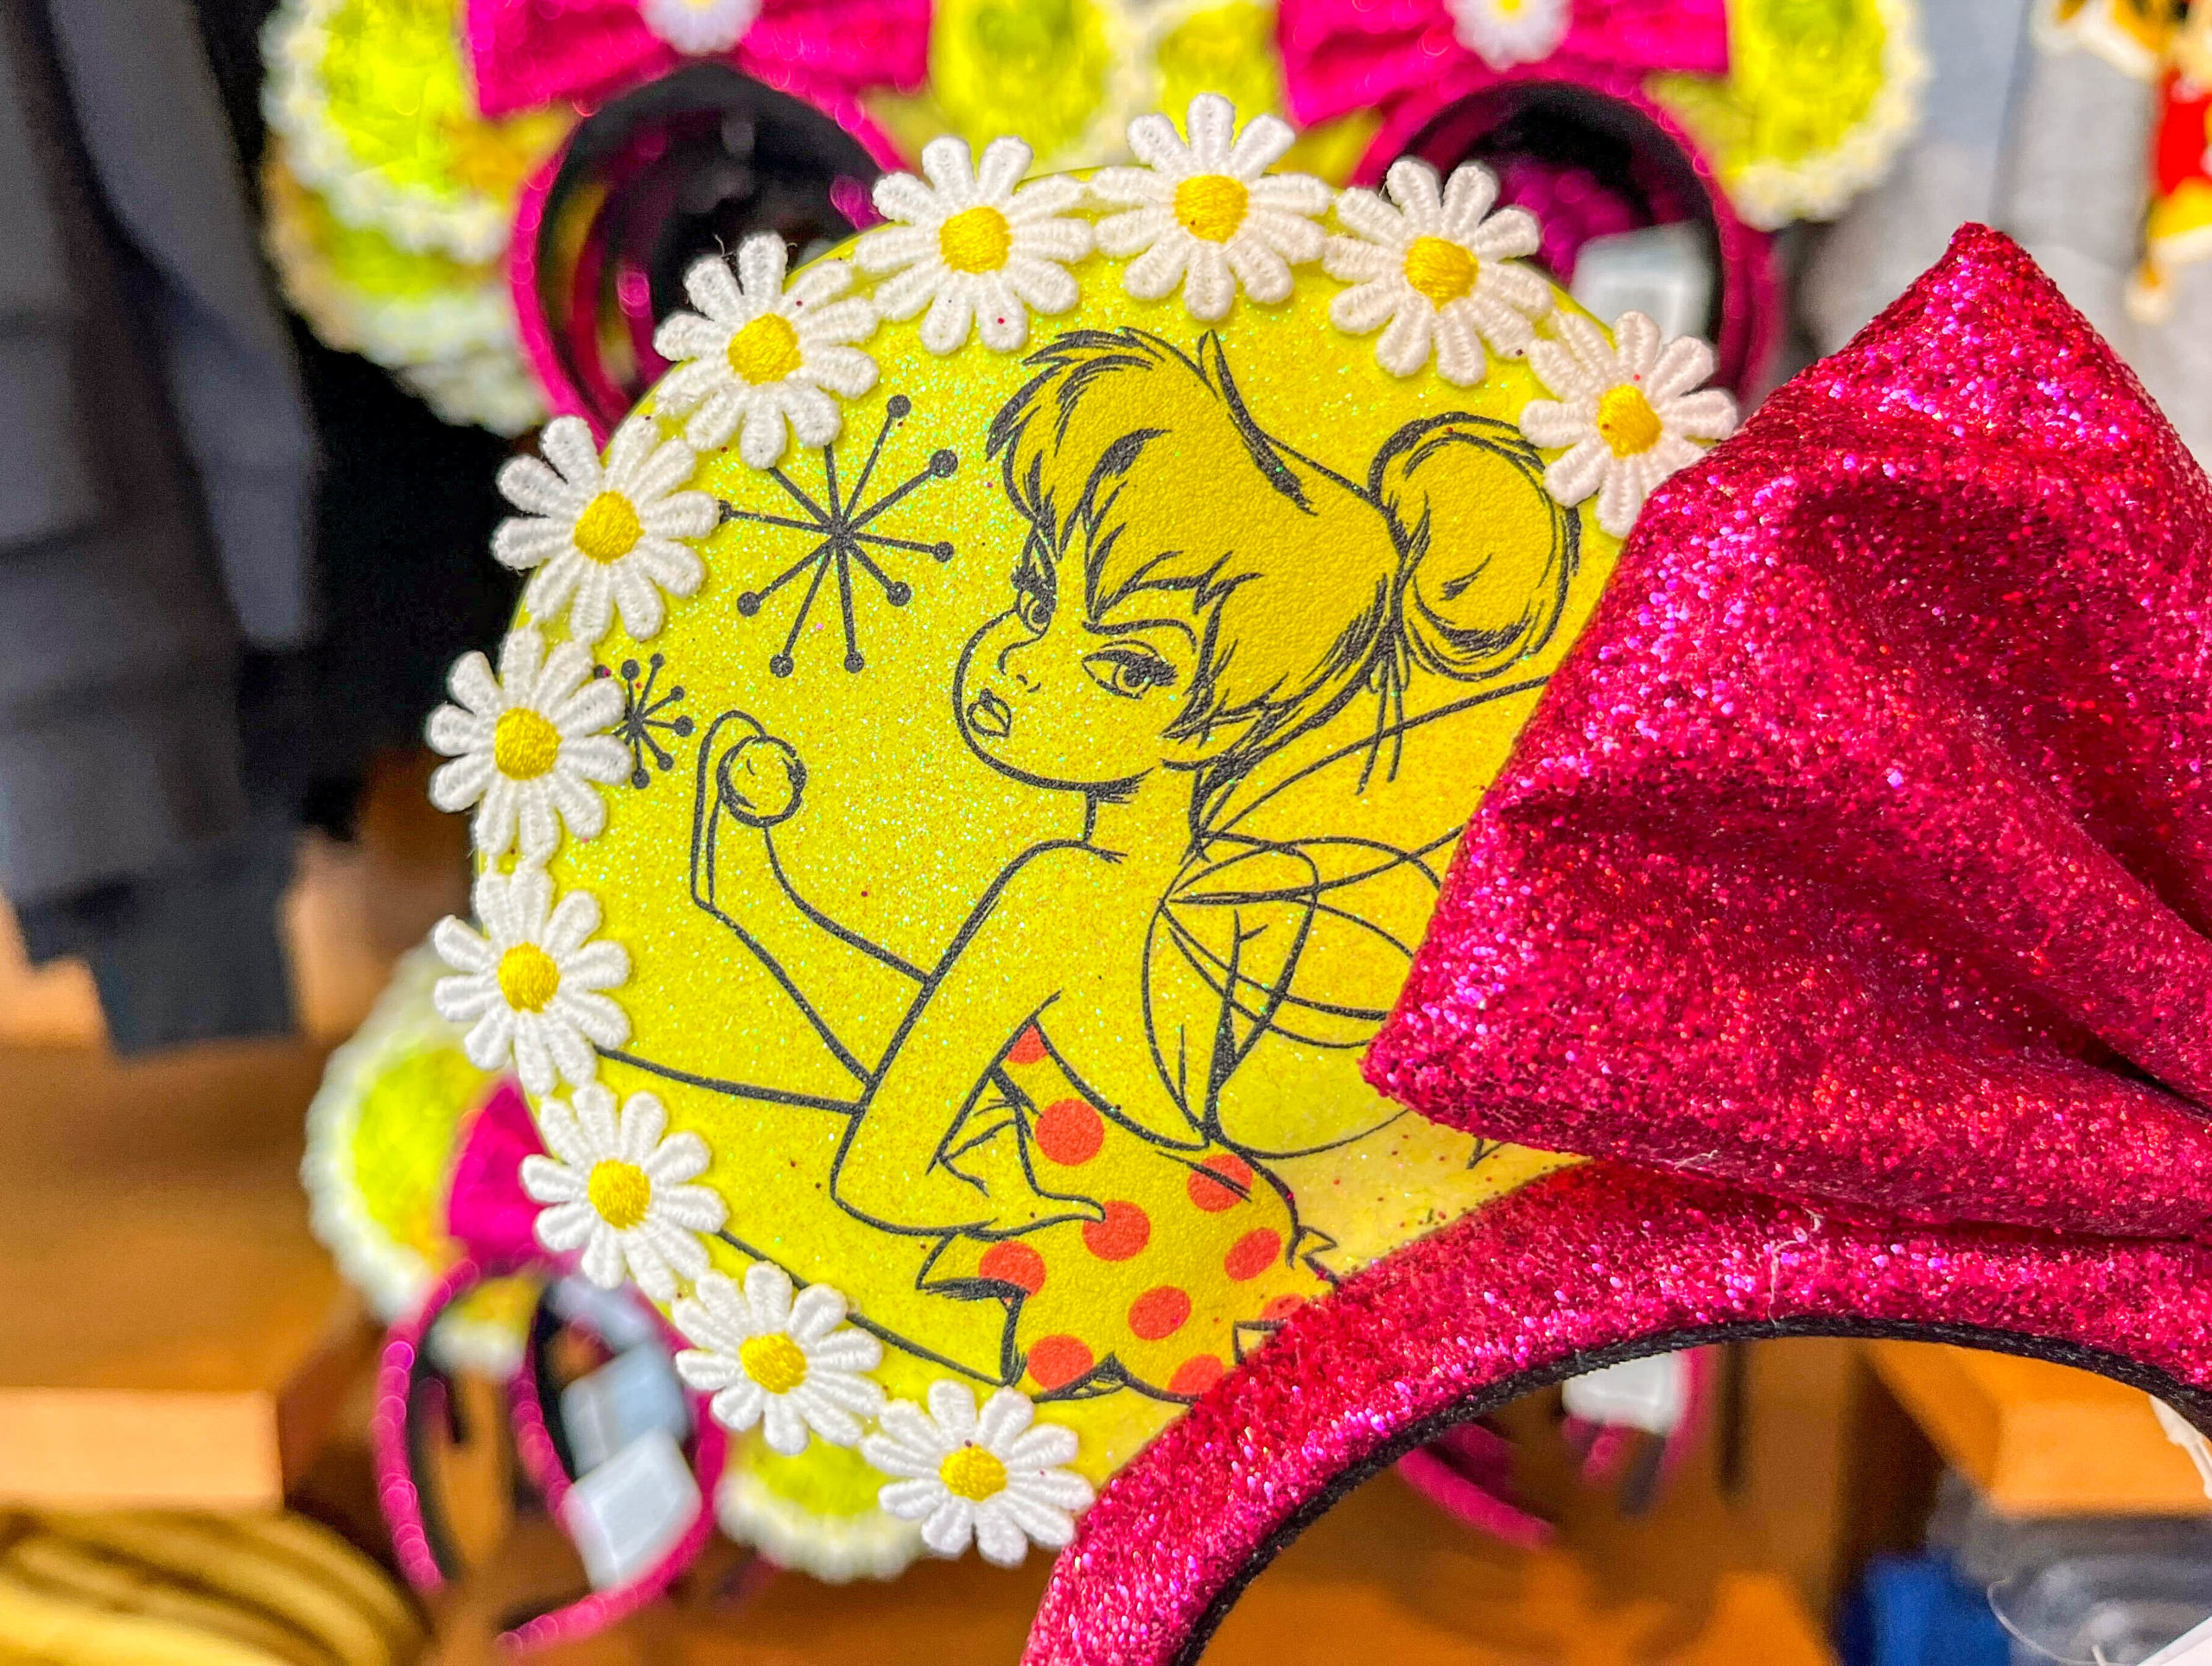 New Sparkly Floral Tinker Bell Ear Headband at Disneyland - Disneyland News  Today